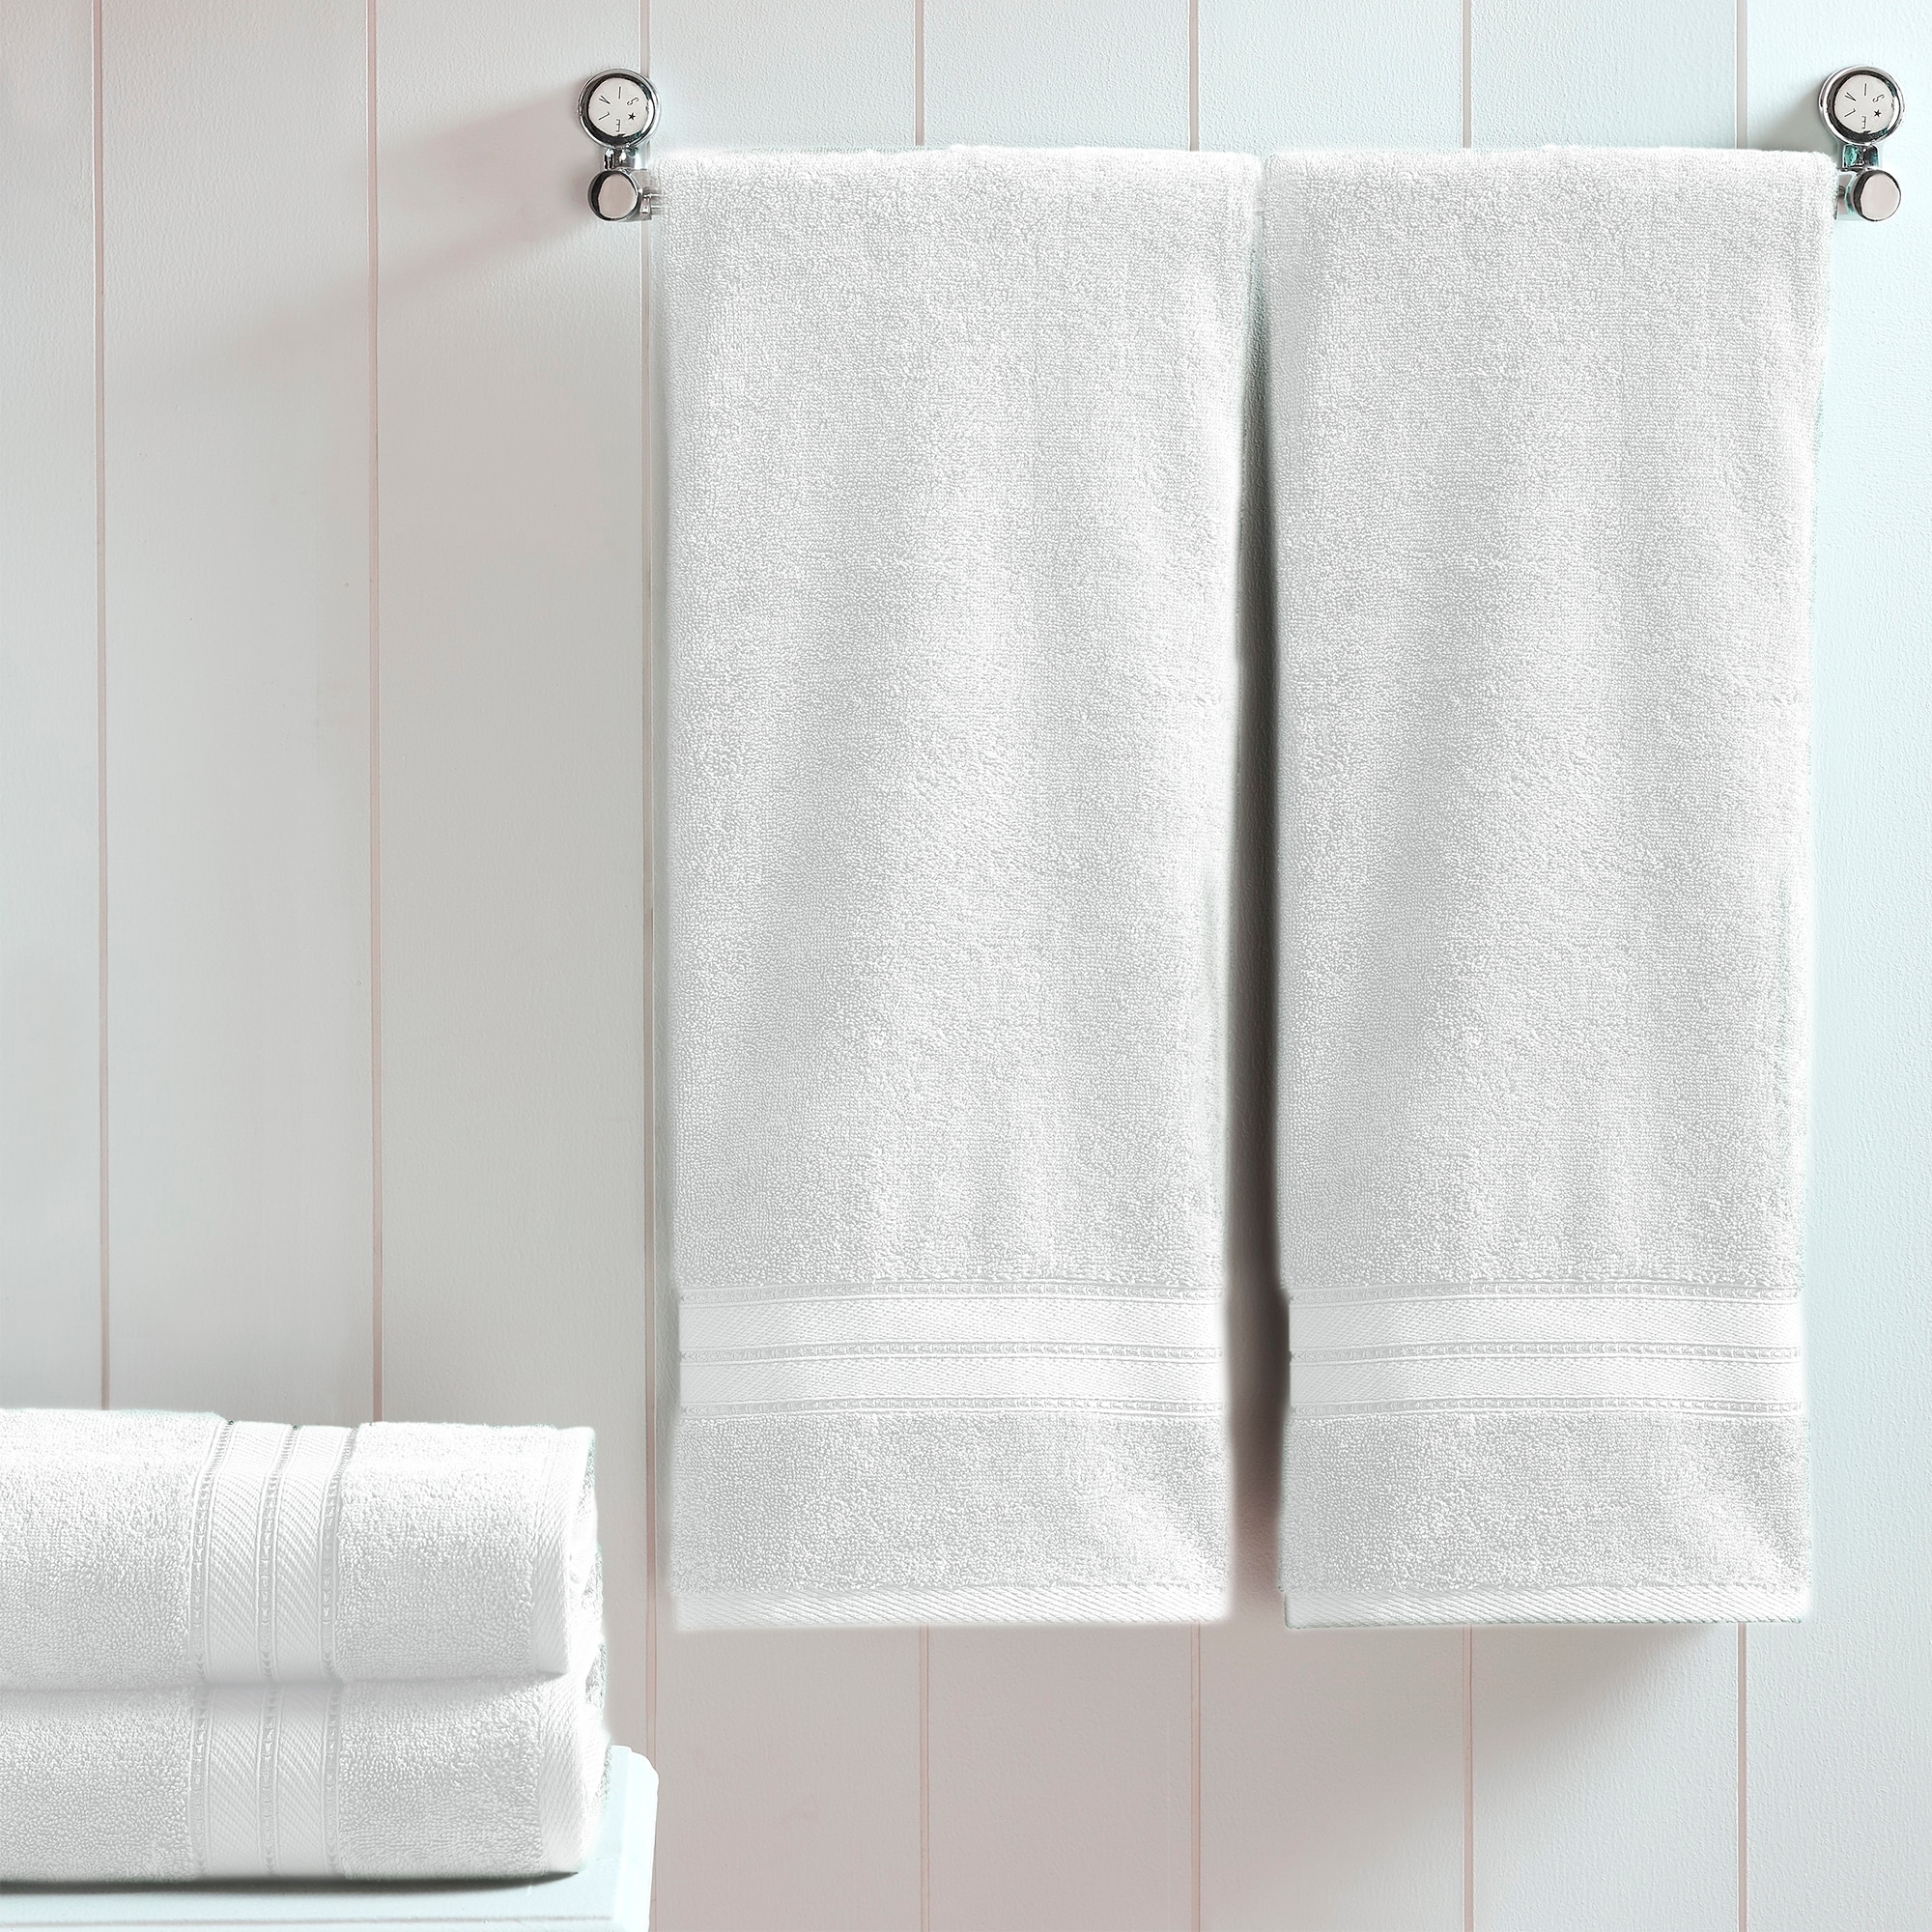  White Bath Towels for Bathroom, 4 Pack Bath Towel Set